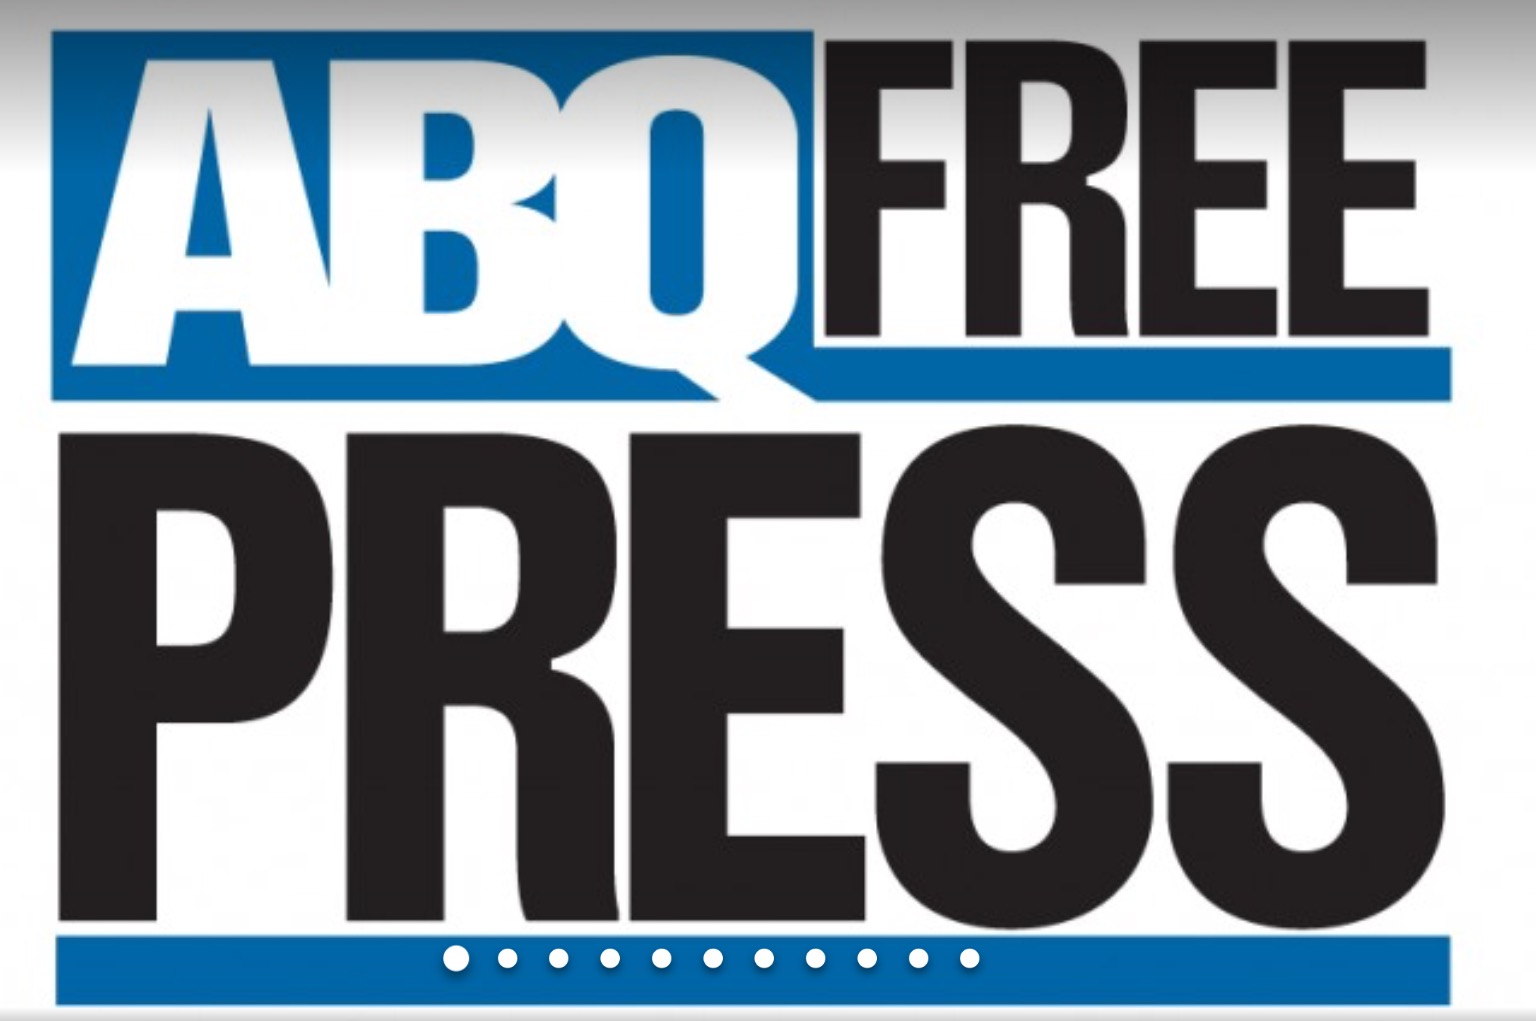 THE ALBUQUERQUE FREE PRESS